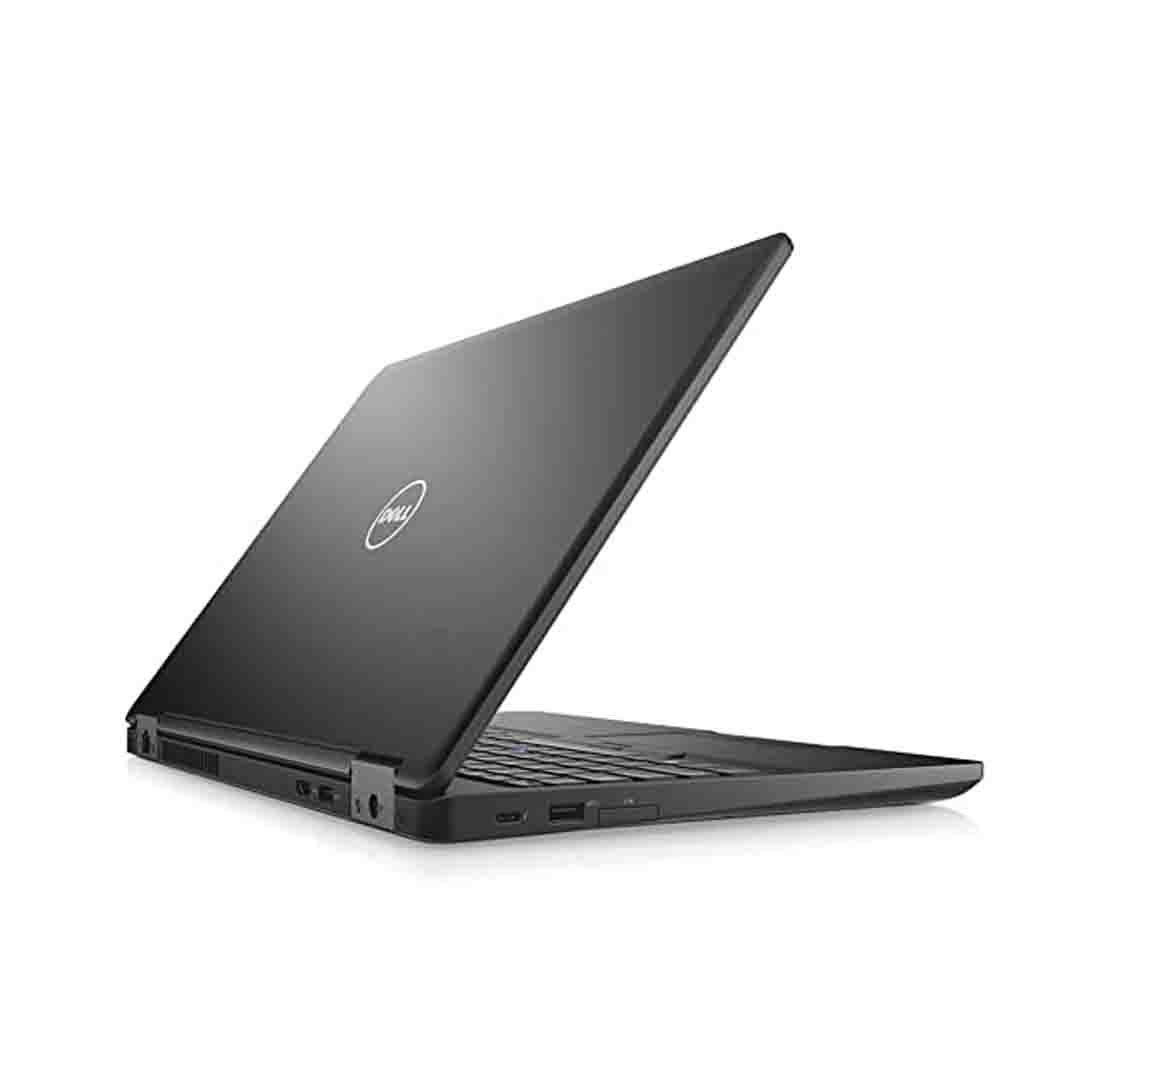 Dell Latitude E7490 Business Laptop, Intel Core i7-8th Gen. CPU, 8GB RAM, 256GB SSD, 14 inch Touchscreen, Windows 10 Pro, Refurbished Laptop